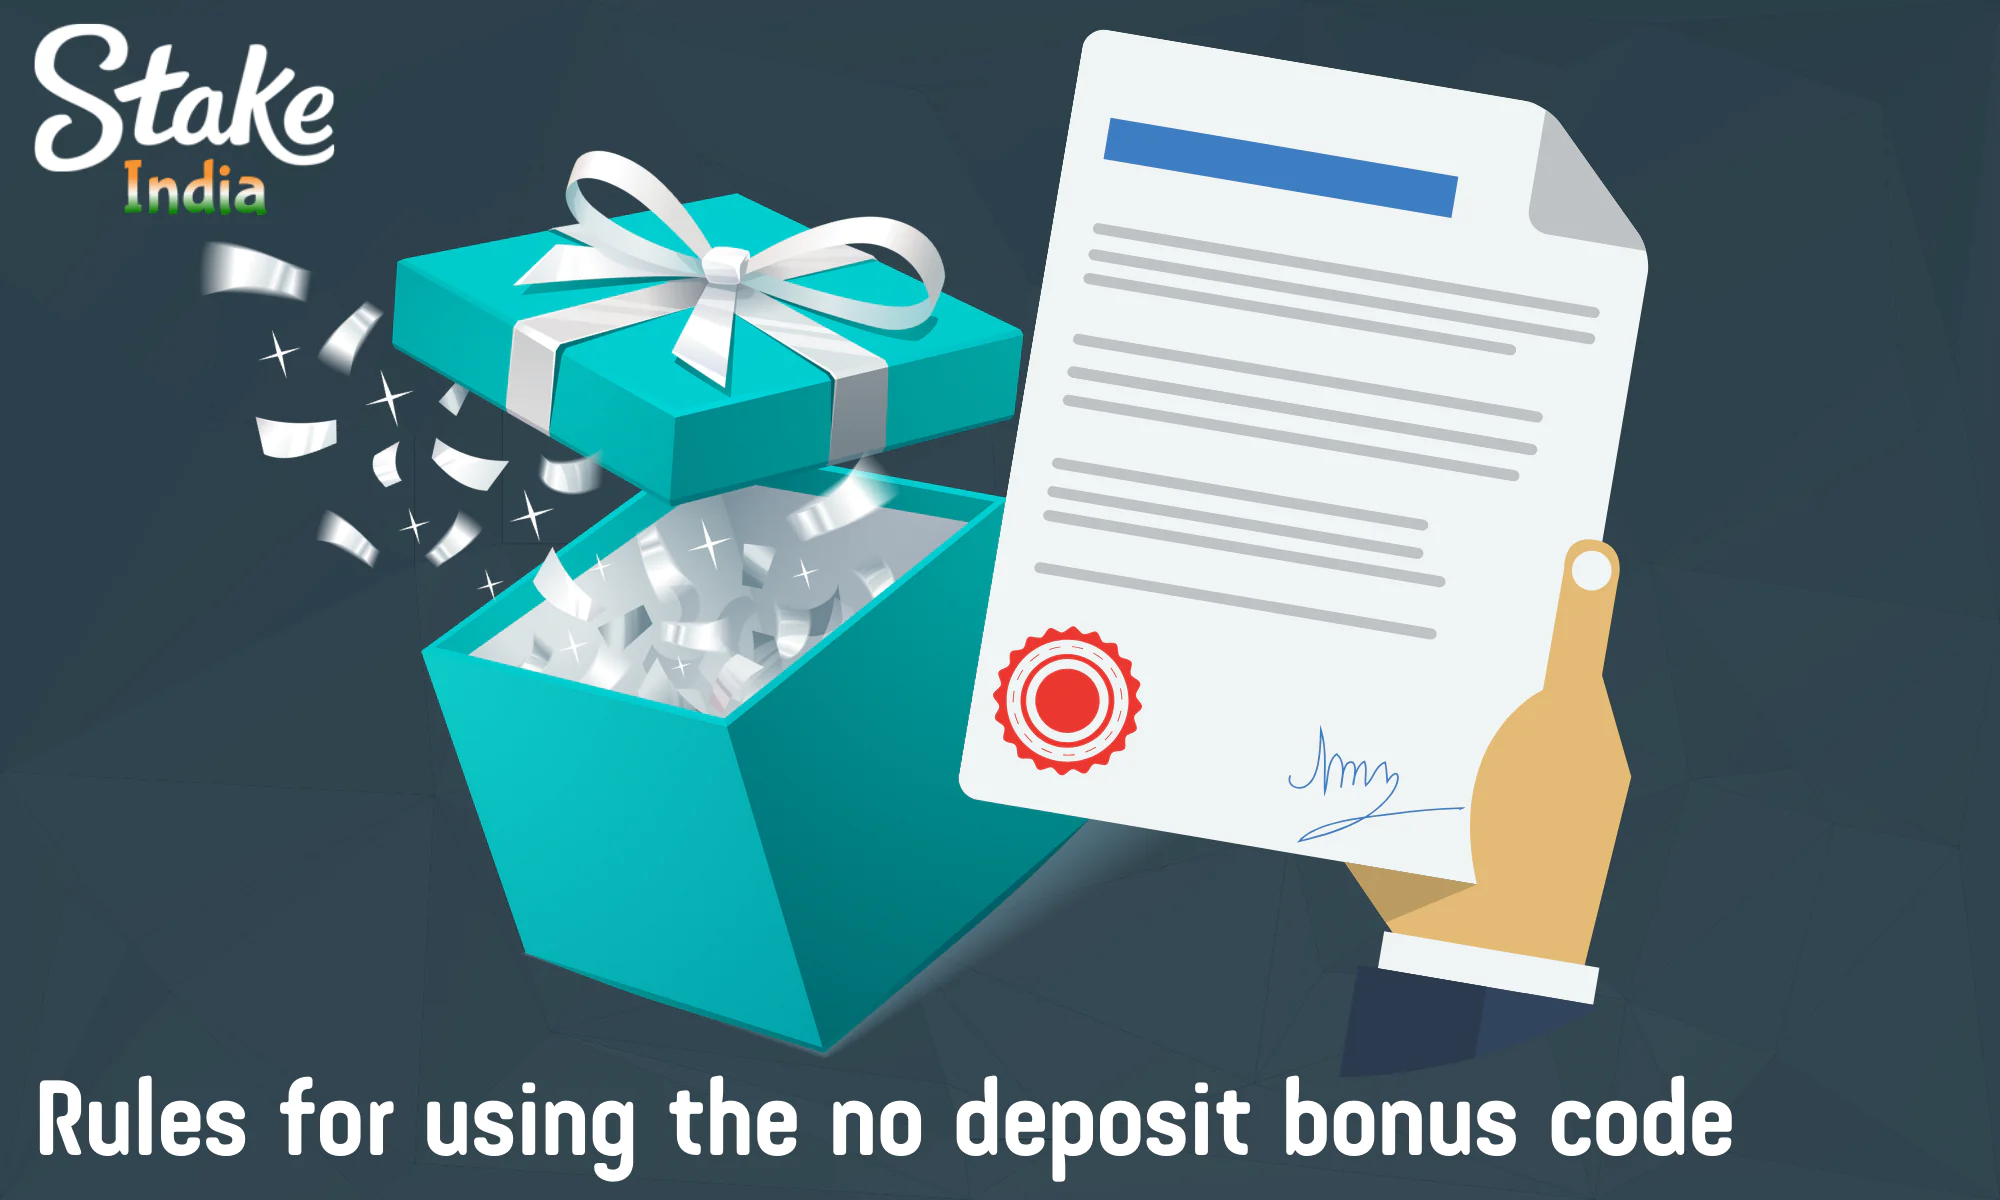 Basic rules for using no deposit bonuses at Stake